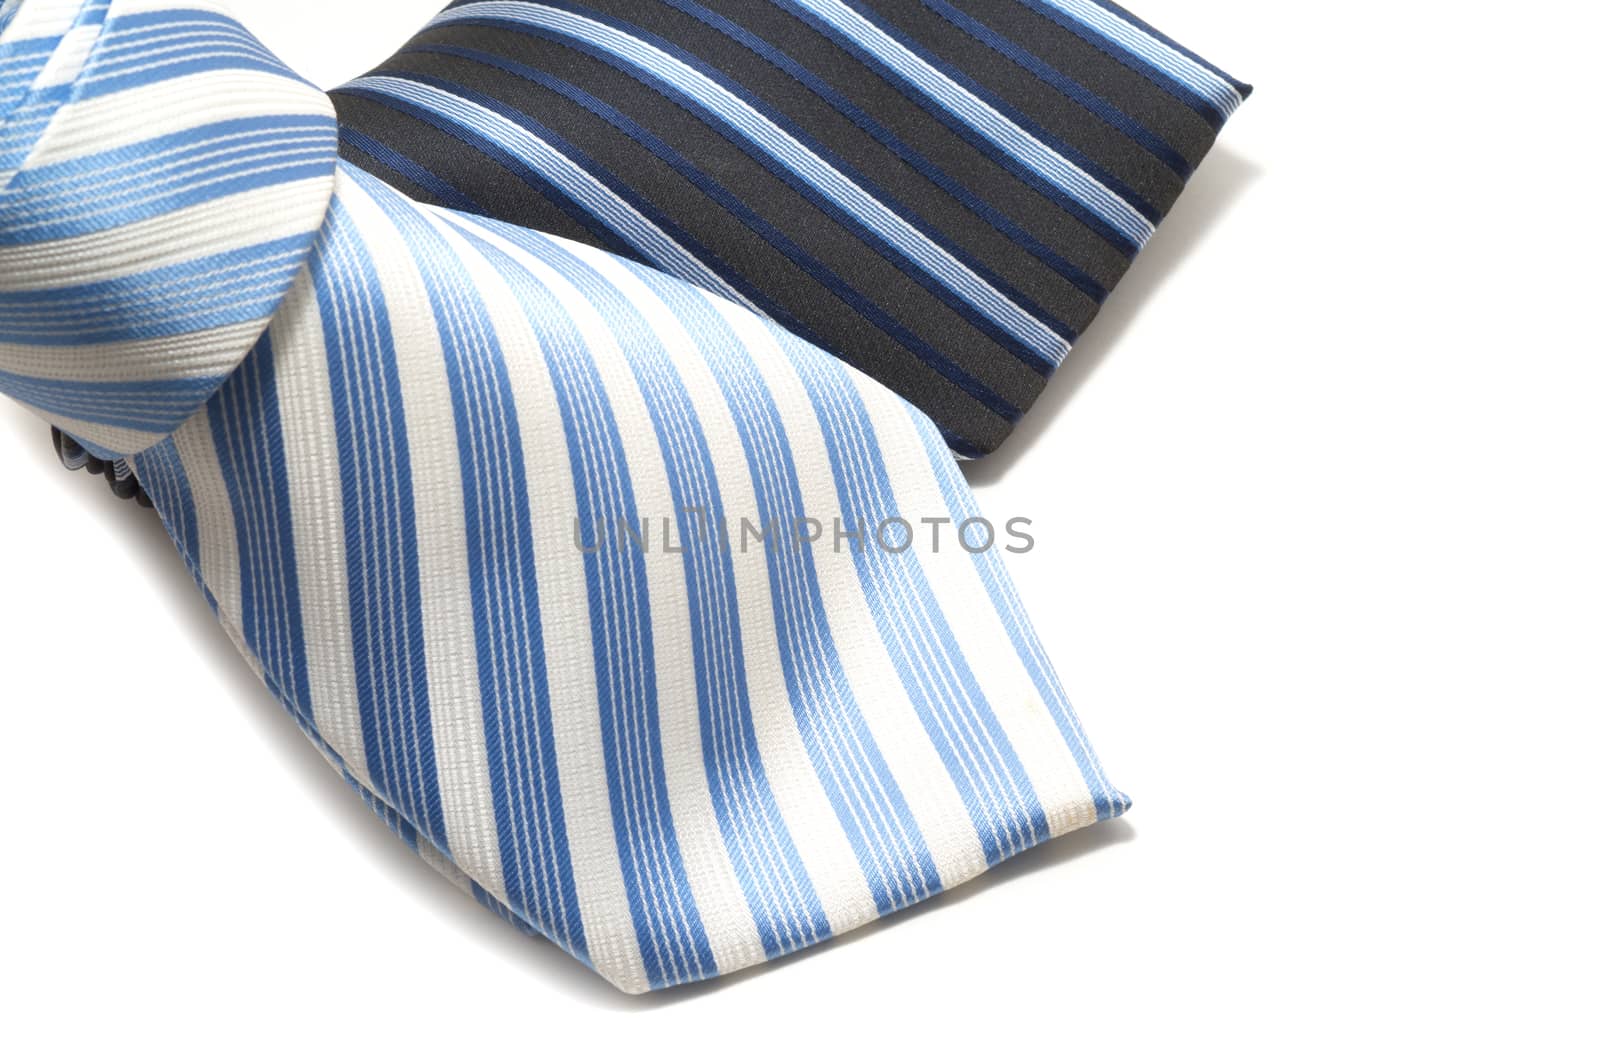 Two pin stripe ties on white background